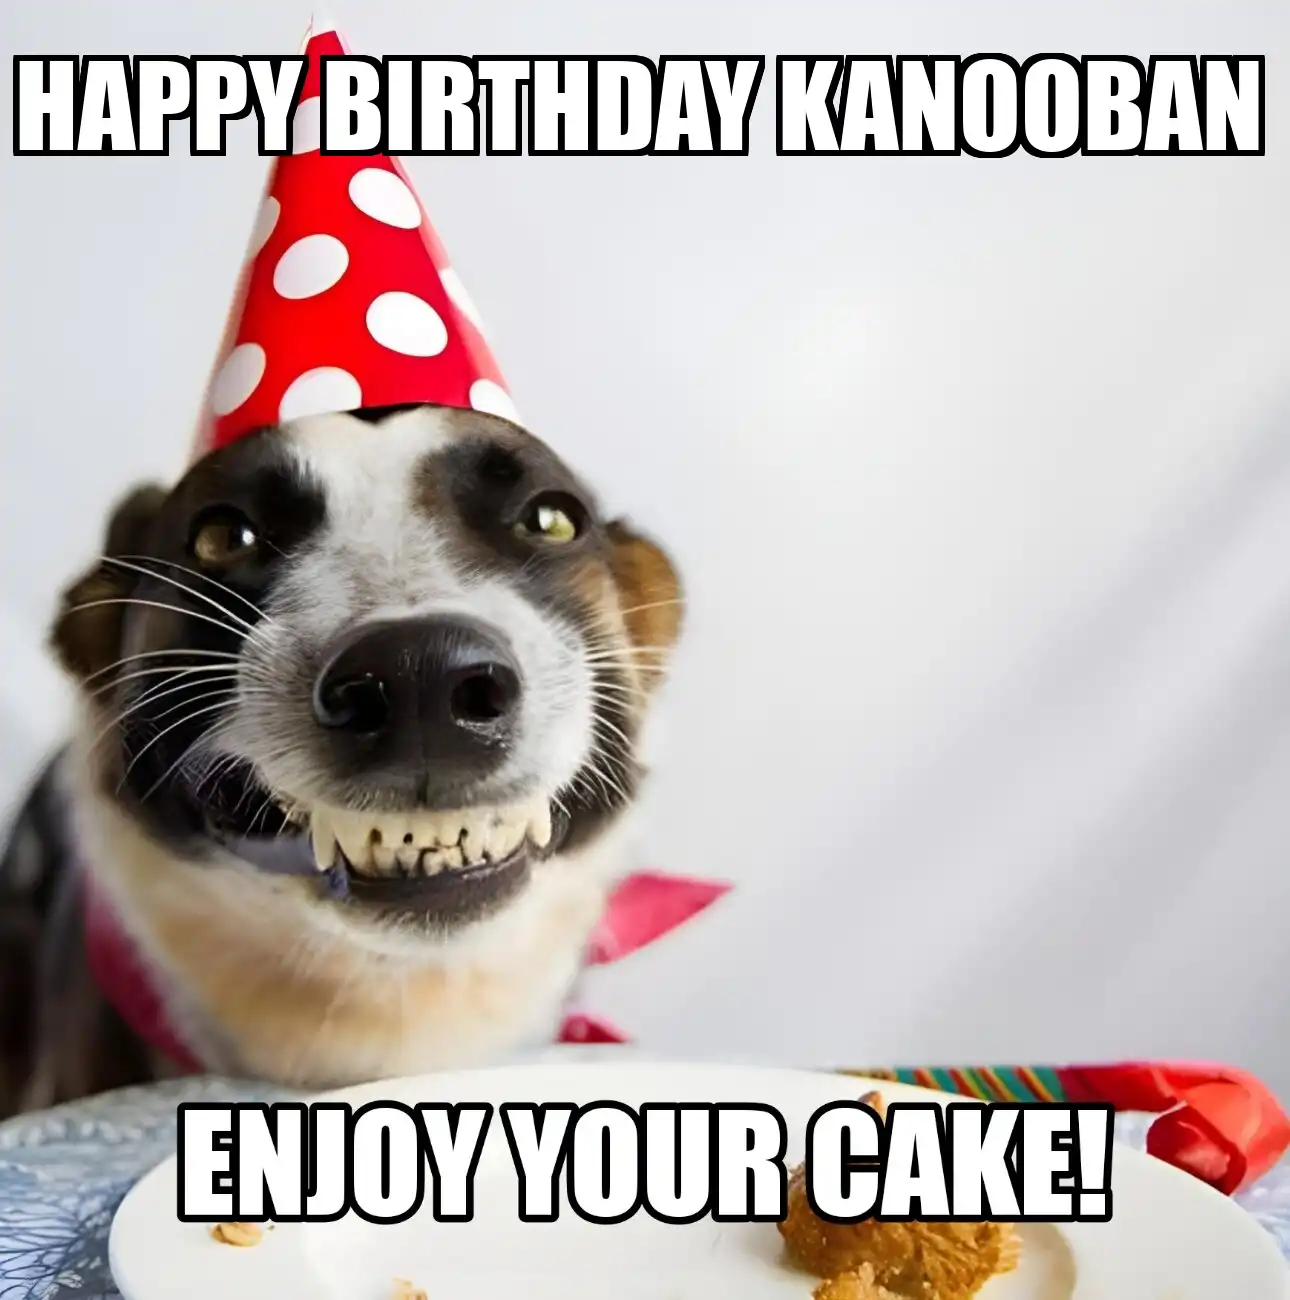 Happy Birthday Kanooban Enjoy Your Cake Dog Meme